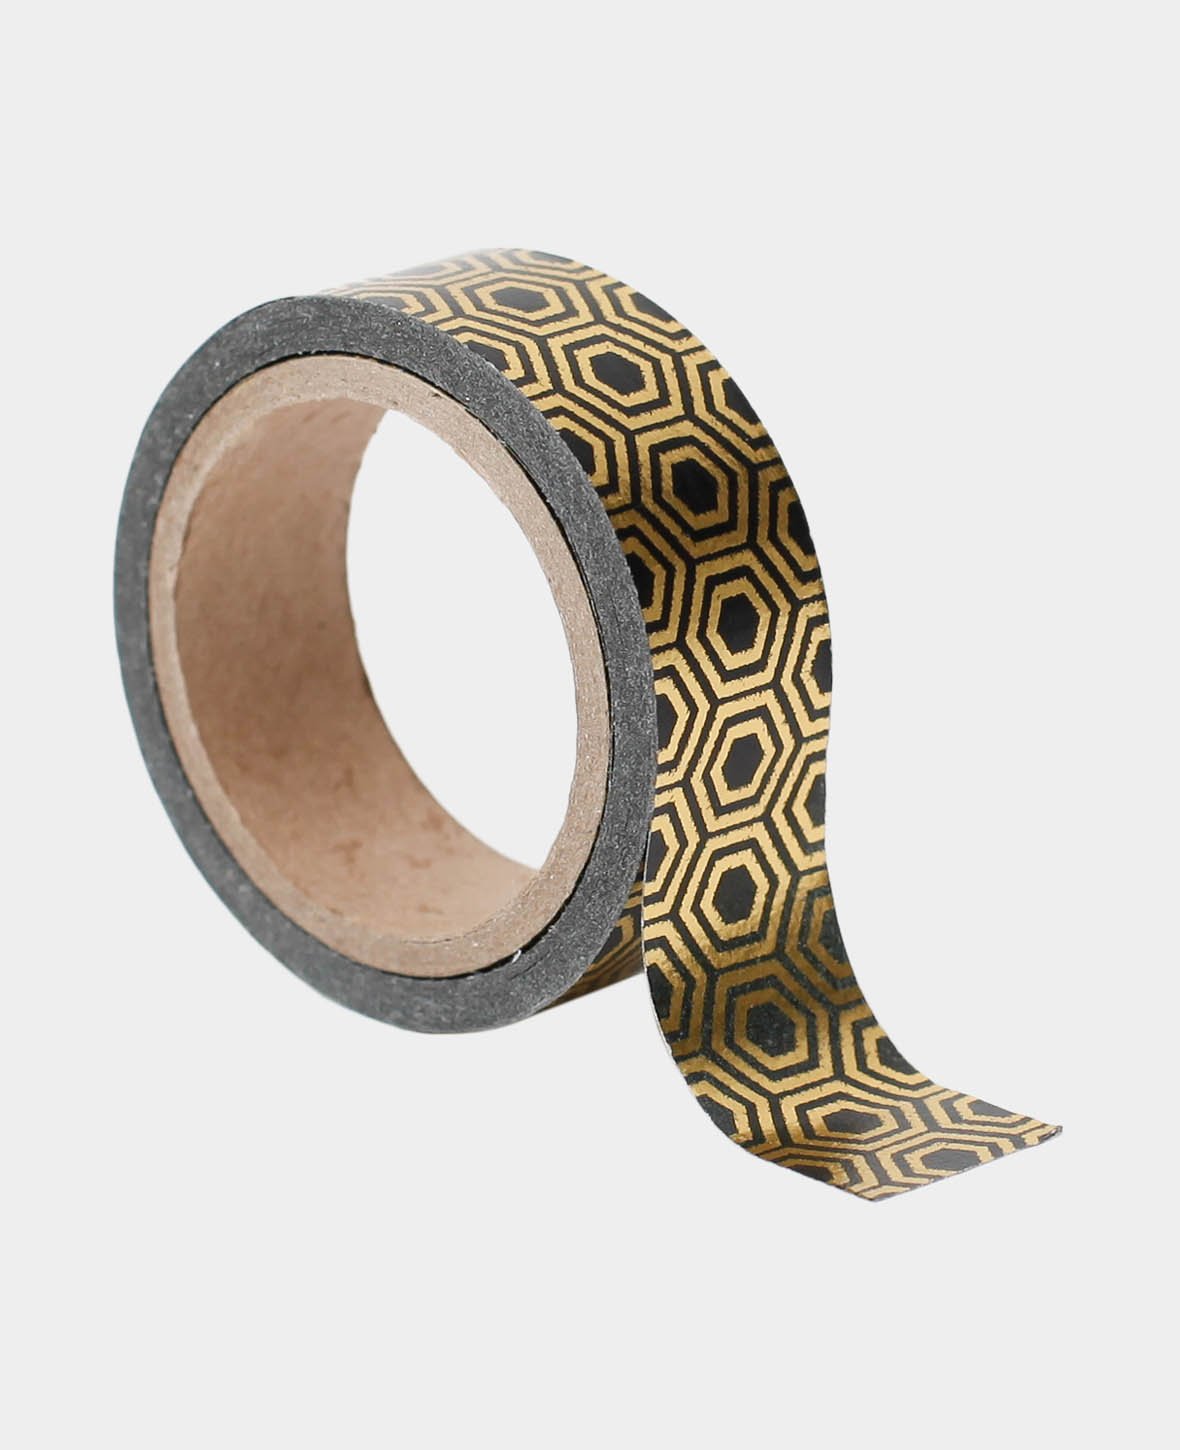 Washi Tape 15 mm x 5 m, Metallic Gold, Masking Tape Klebeband zum